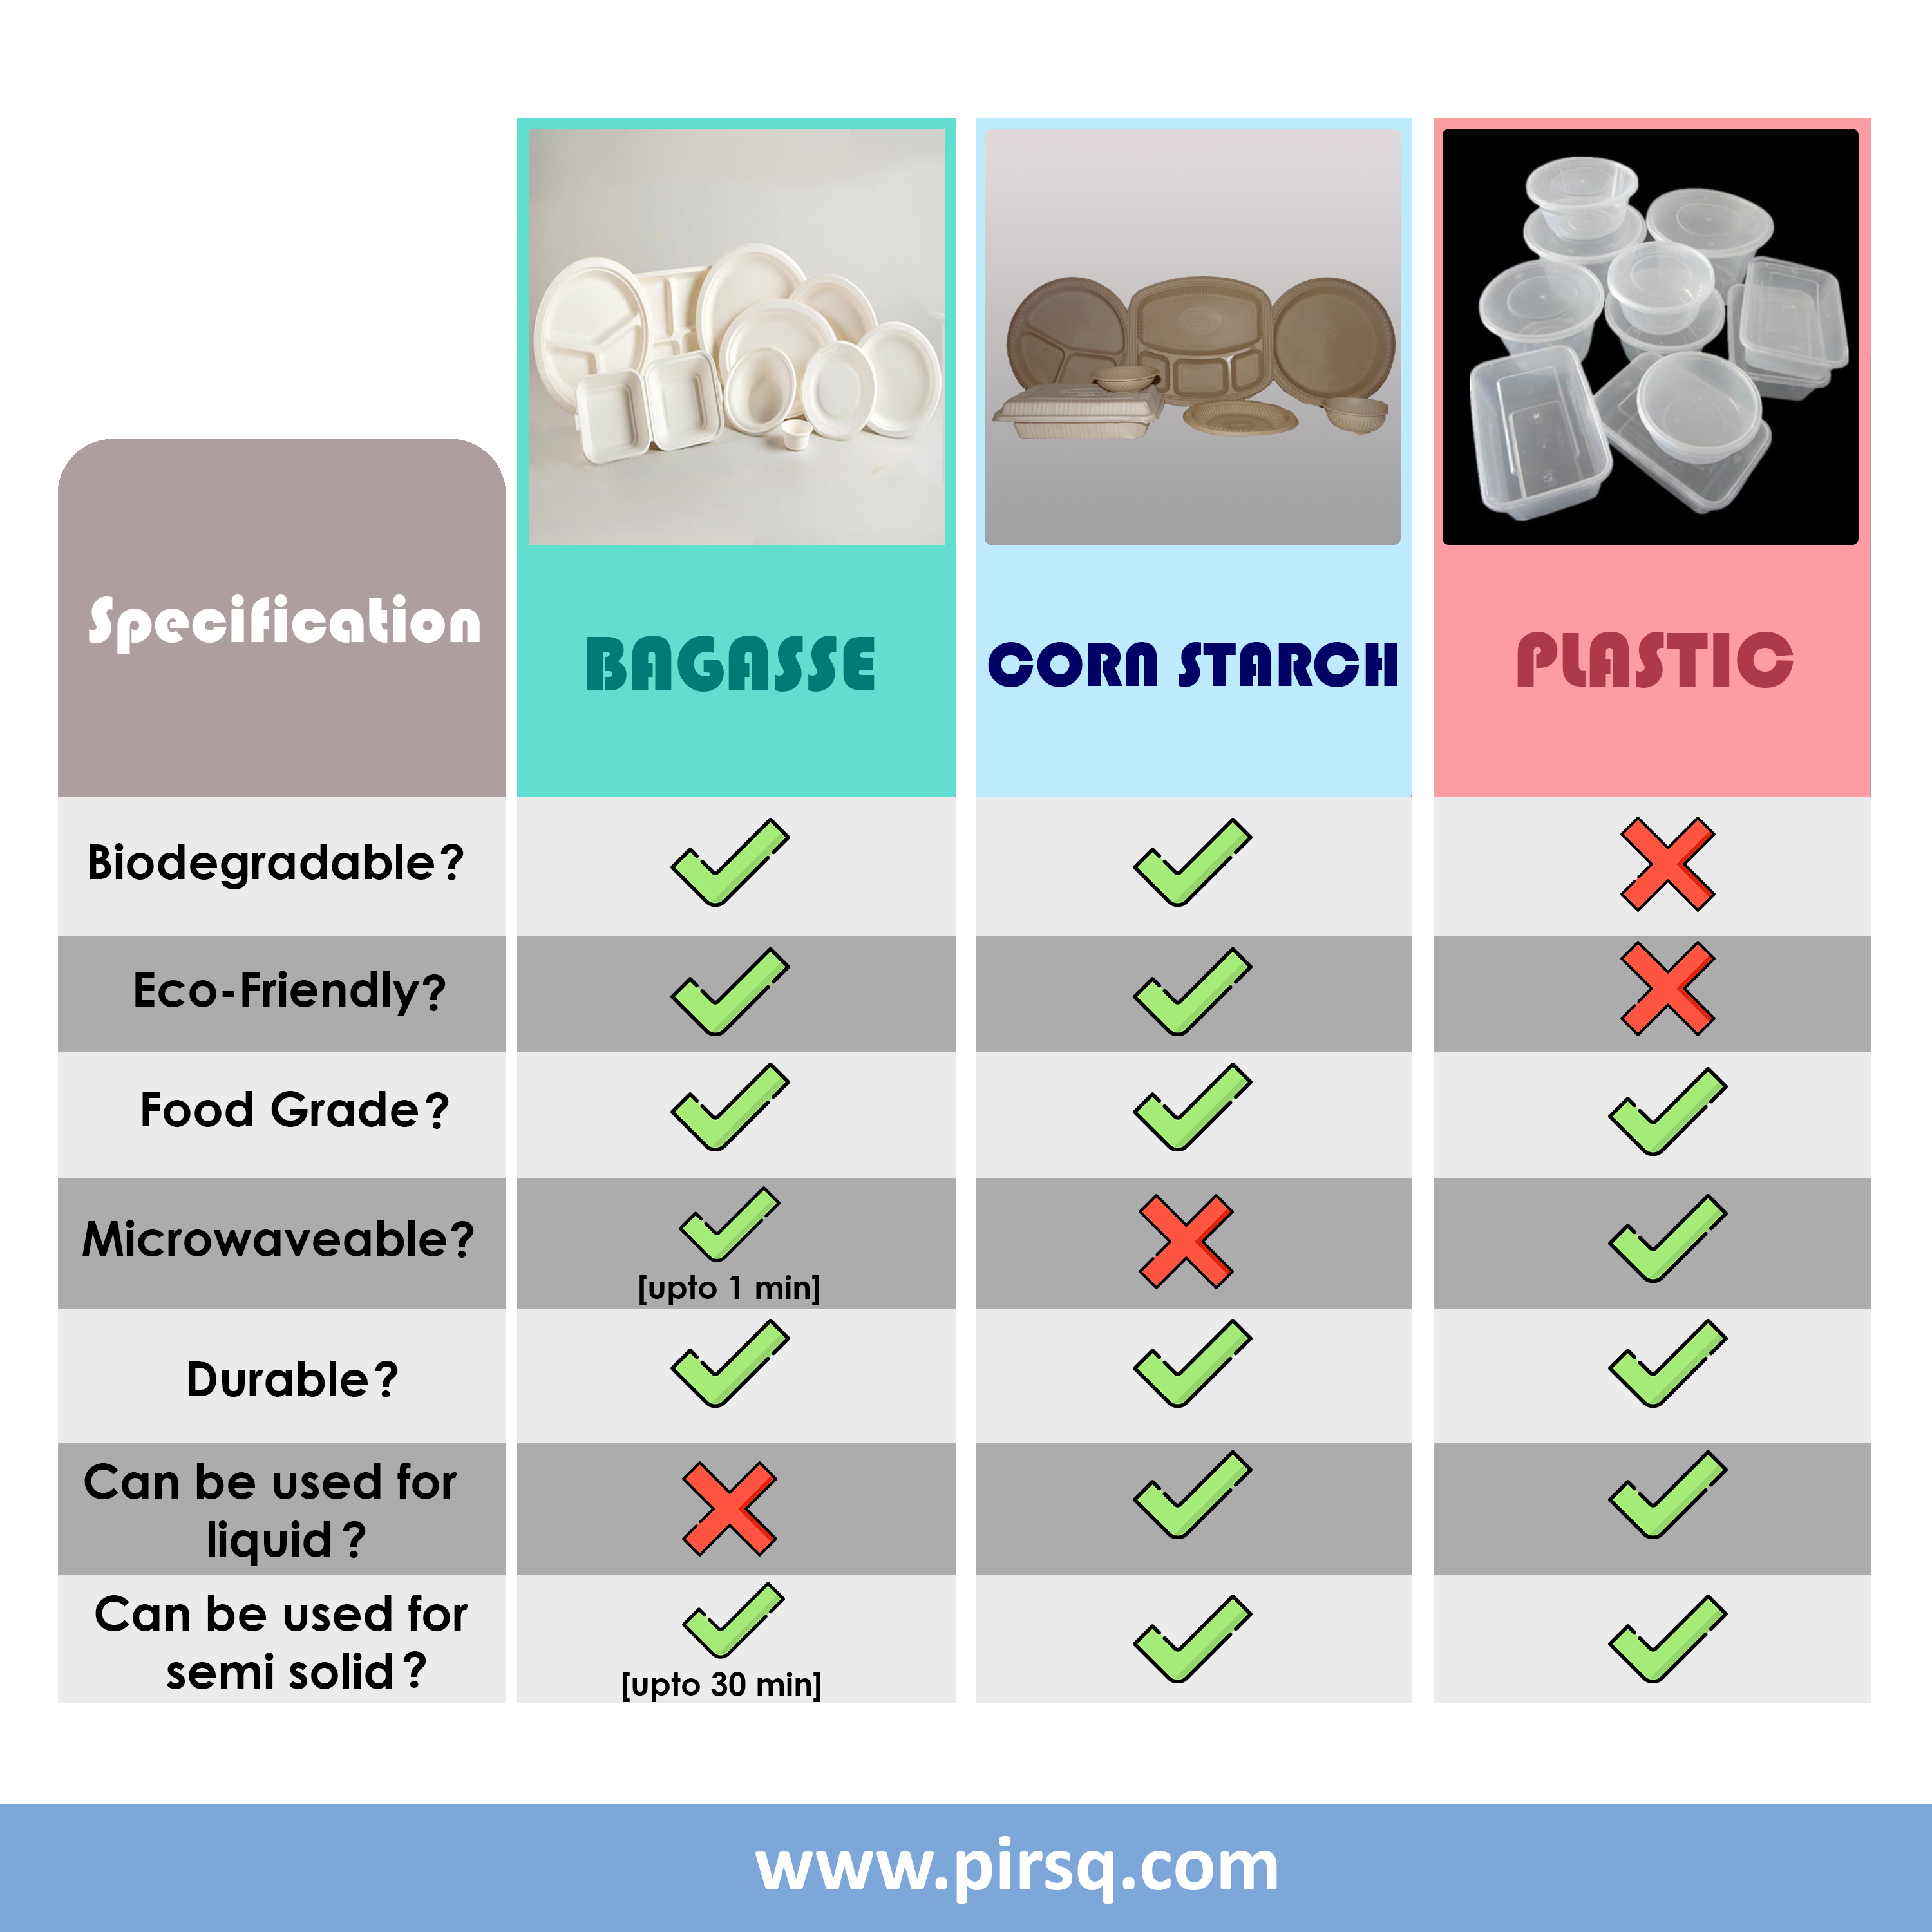 Bagasse, CornStarch, or Plastic? Image